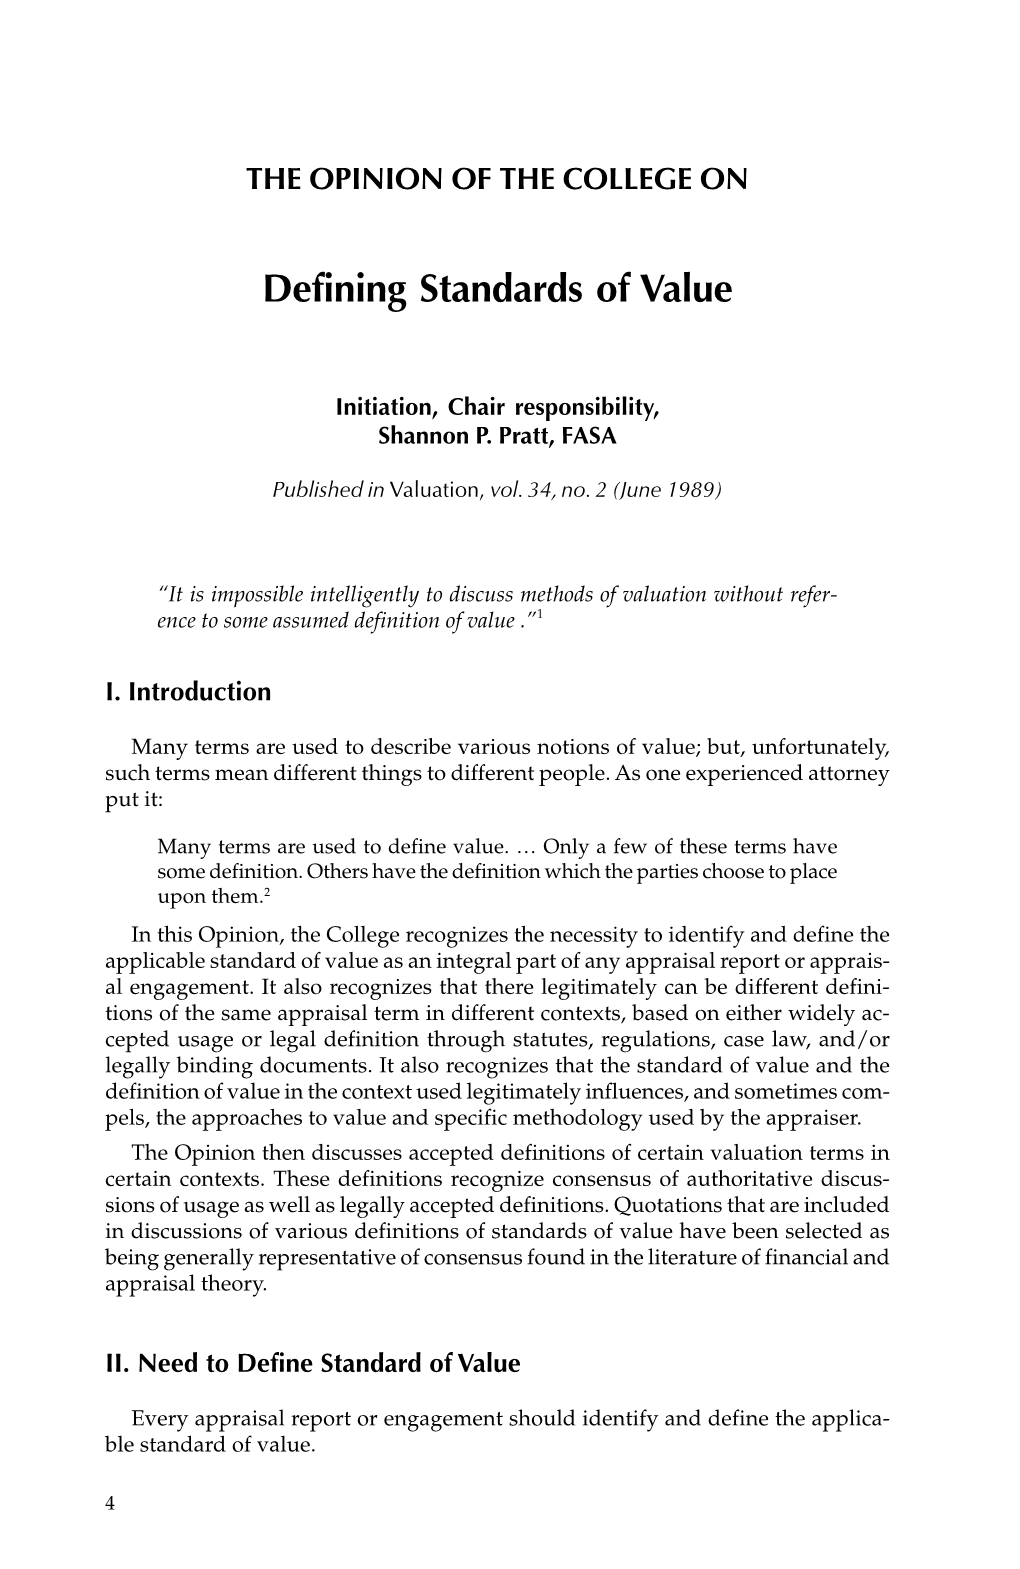 Defining Standards of Value